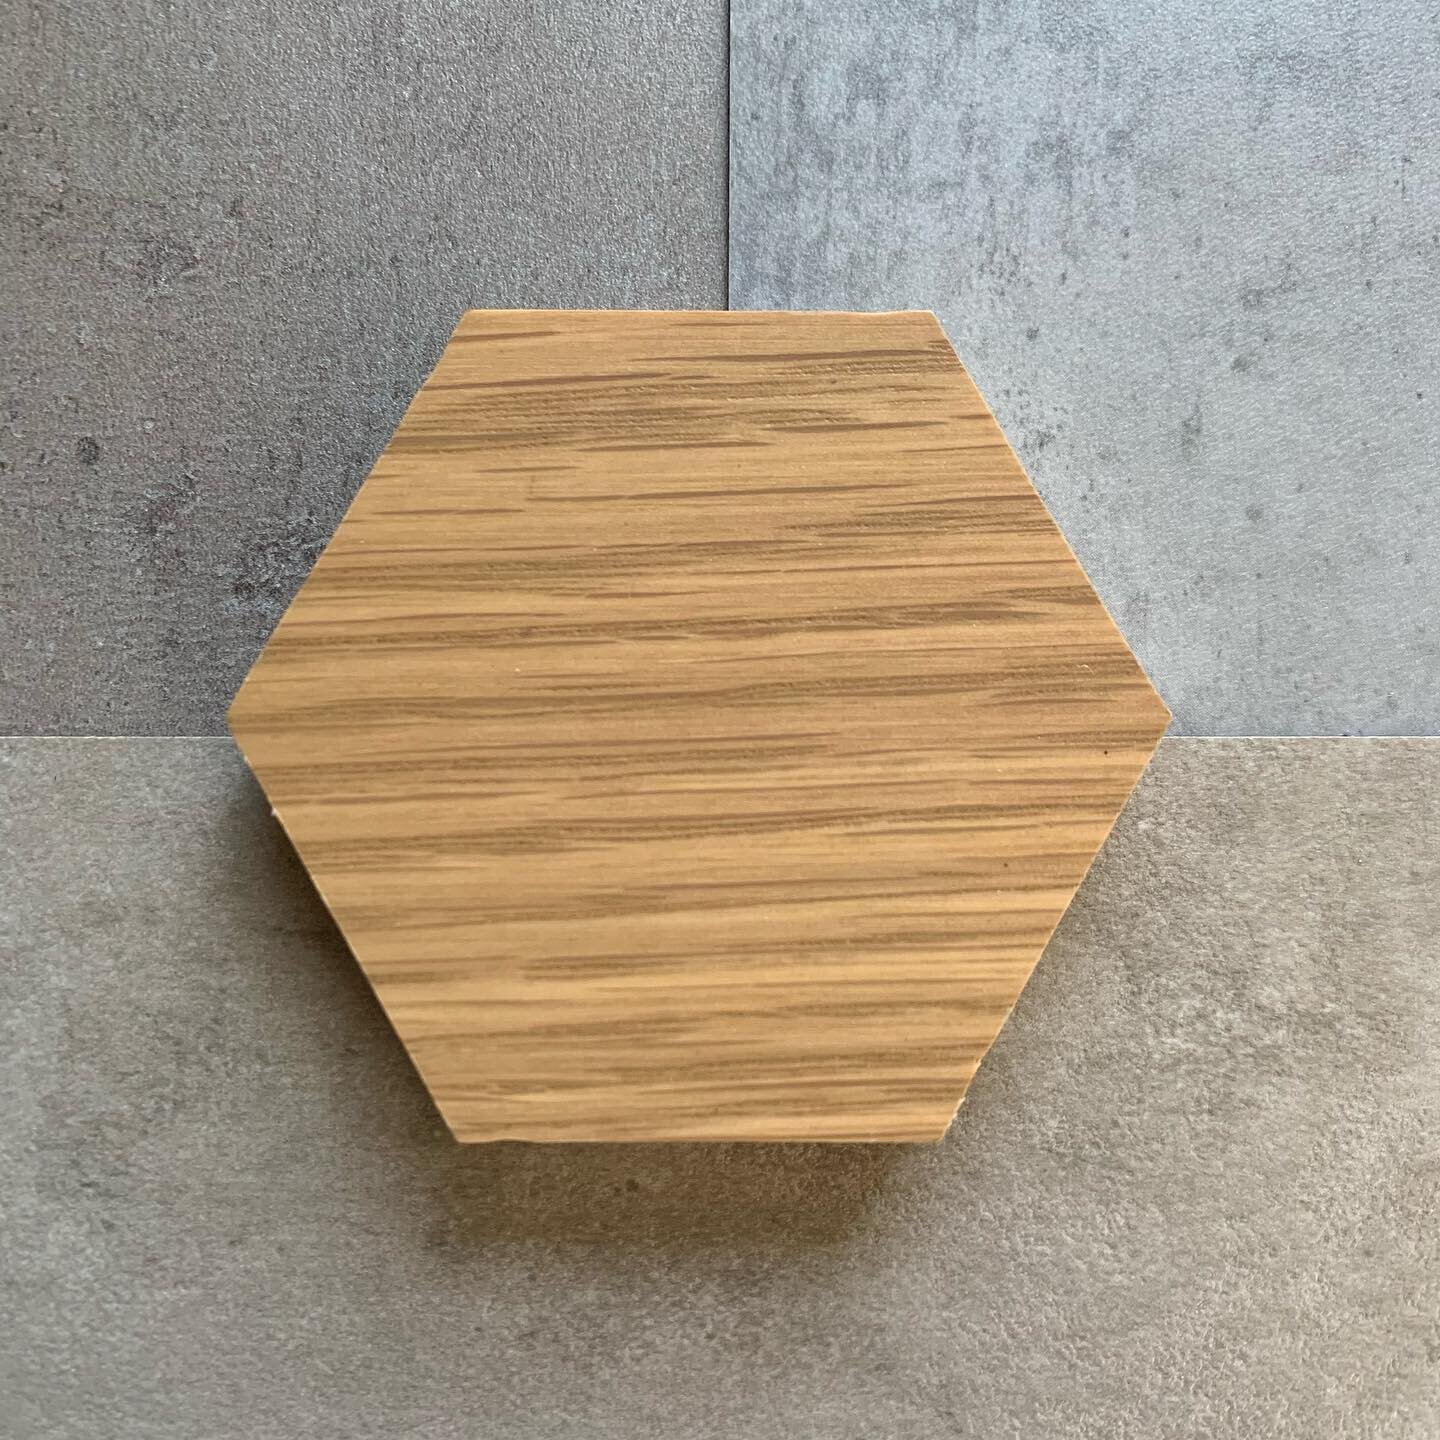 Three options for cement and a beautiful wood veneer. #materialselections #setdesignlife #3cstudio